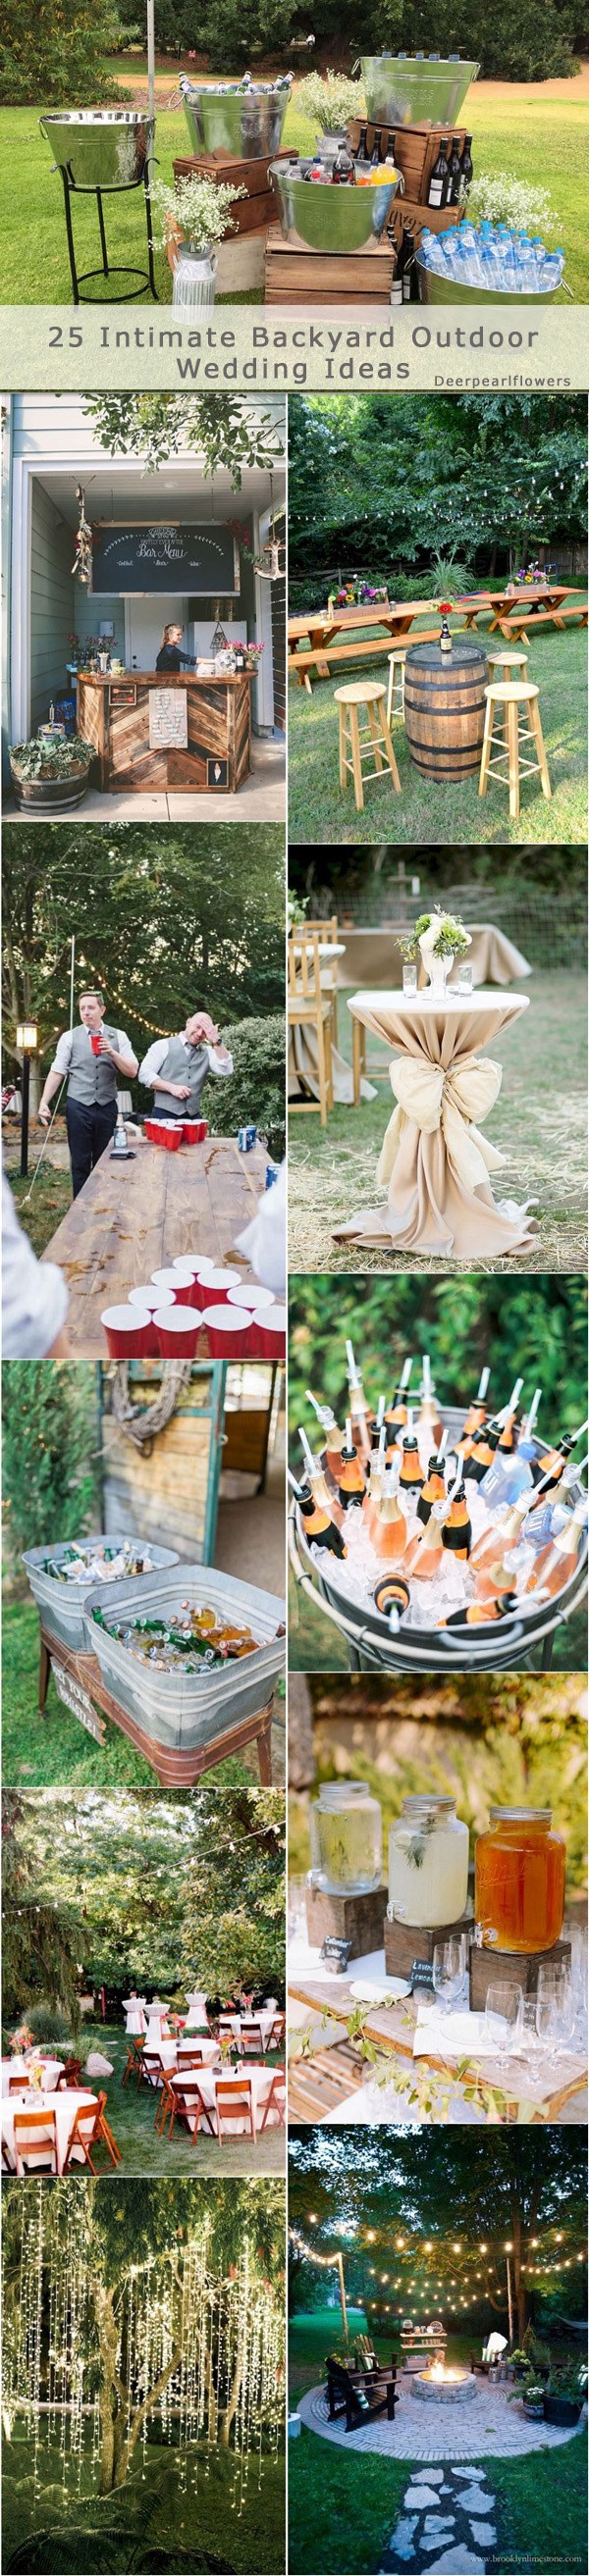 Intimate Backyard Outdoor Wedding Decor Ideas